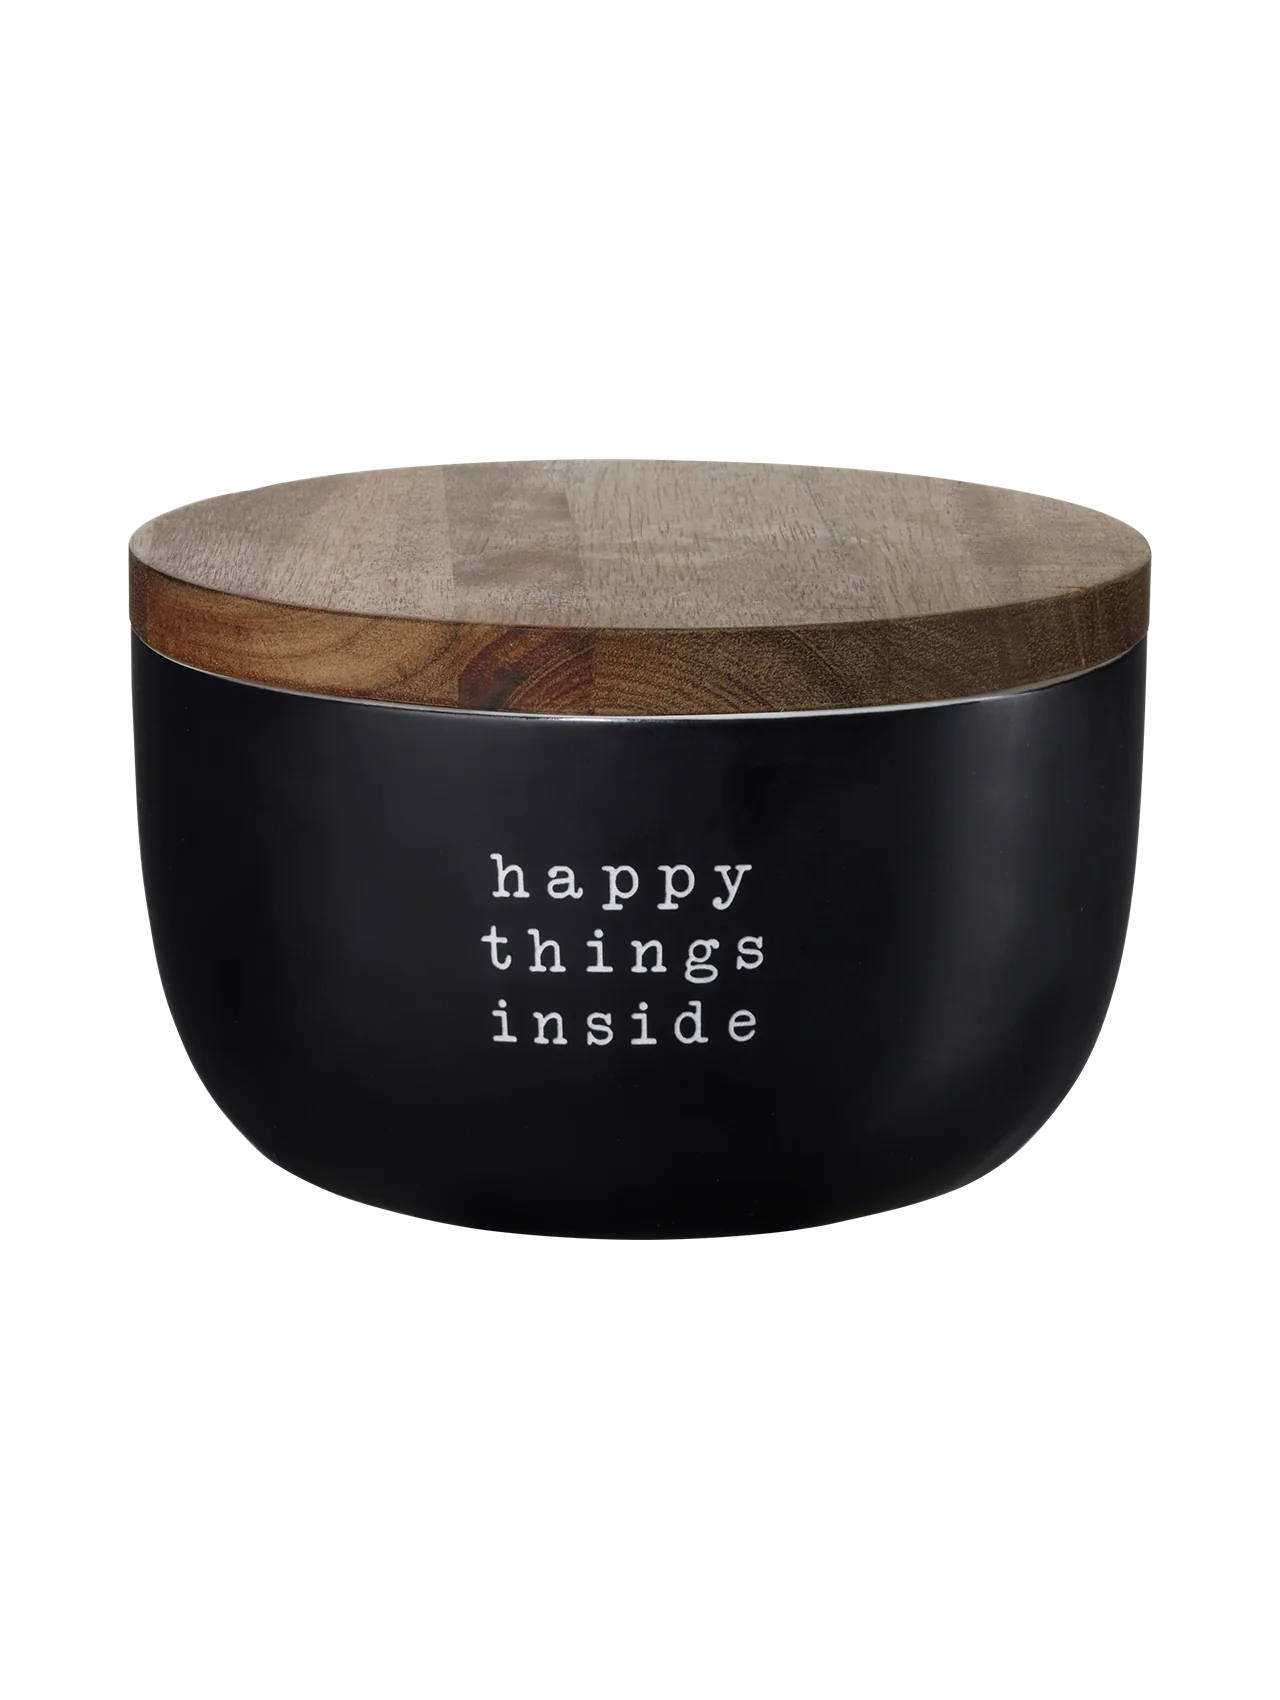  Keks Dose schwarz HAPPY THINGS INSIDE 9 cm hoch Vorratsdose aus Keramik  m. Akazienholzdeckel 